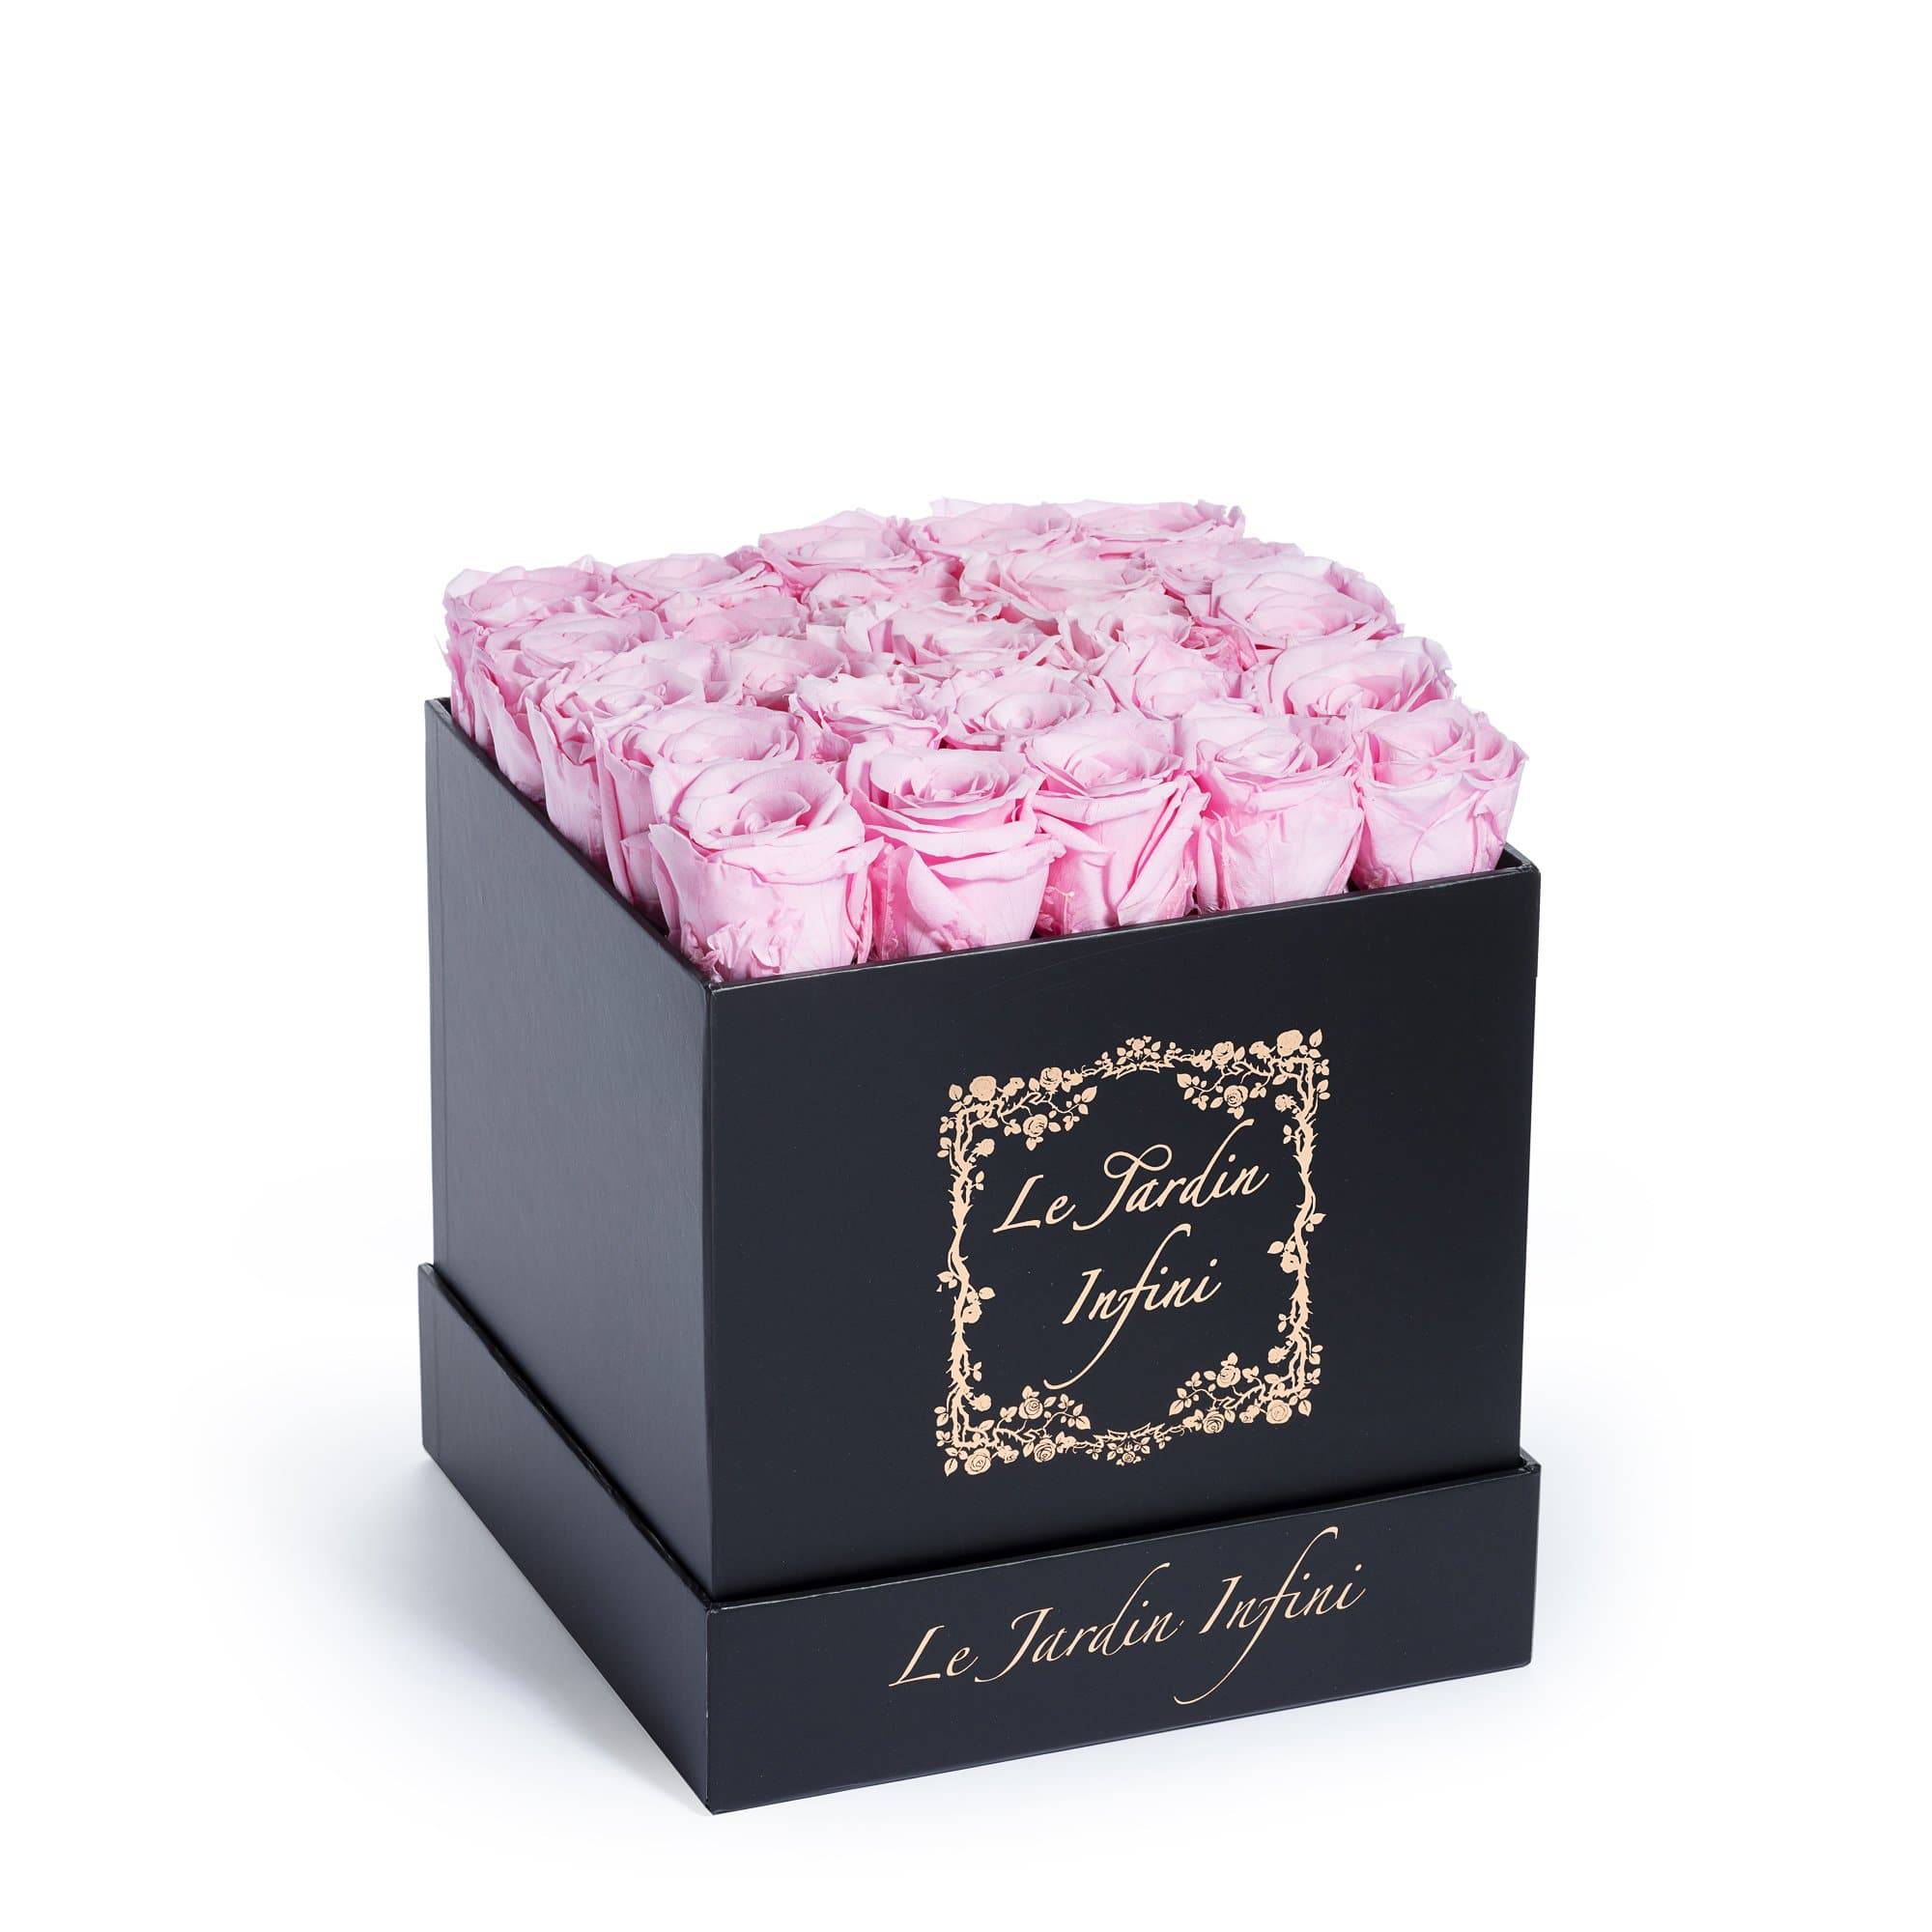 Soft Pink Preserved Roses - Medium Square Black Box